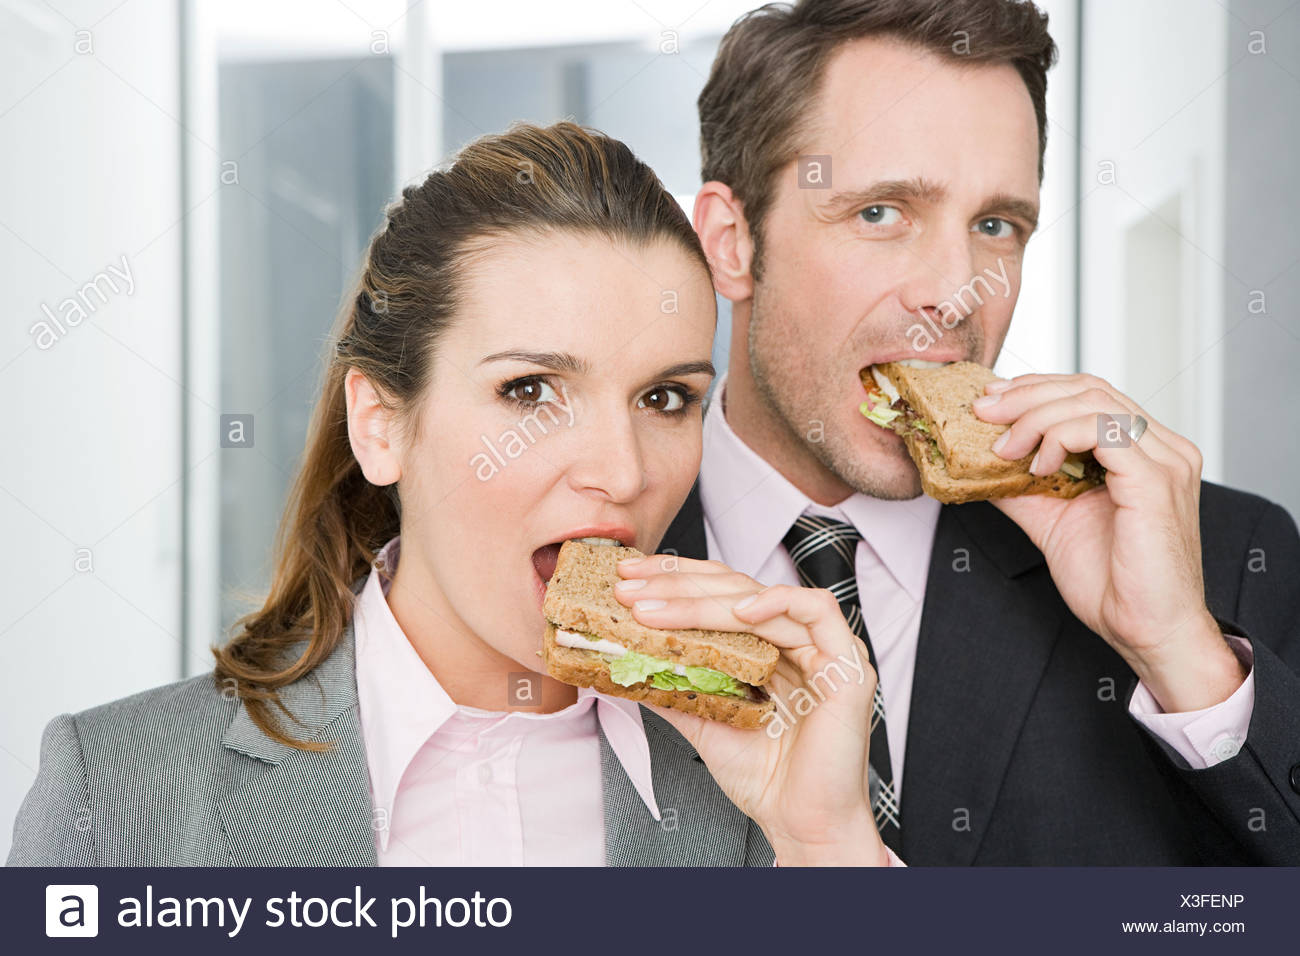 Stock Photo Eating Sandwich